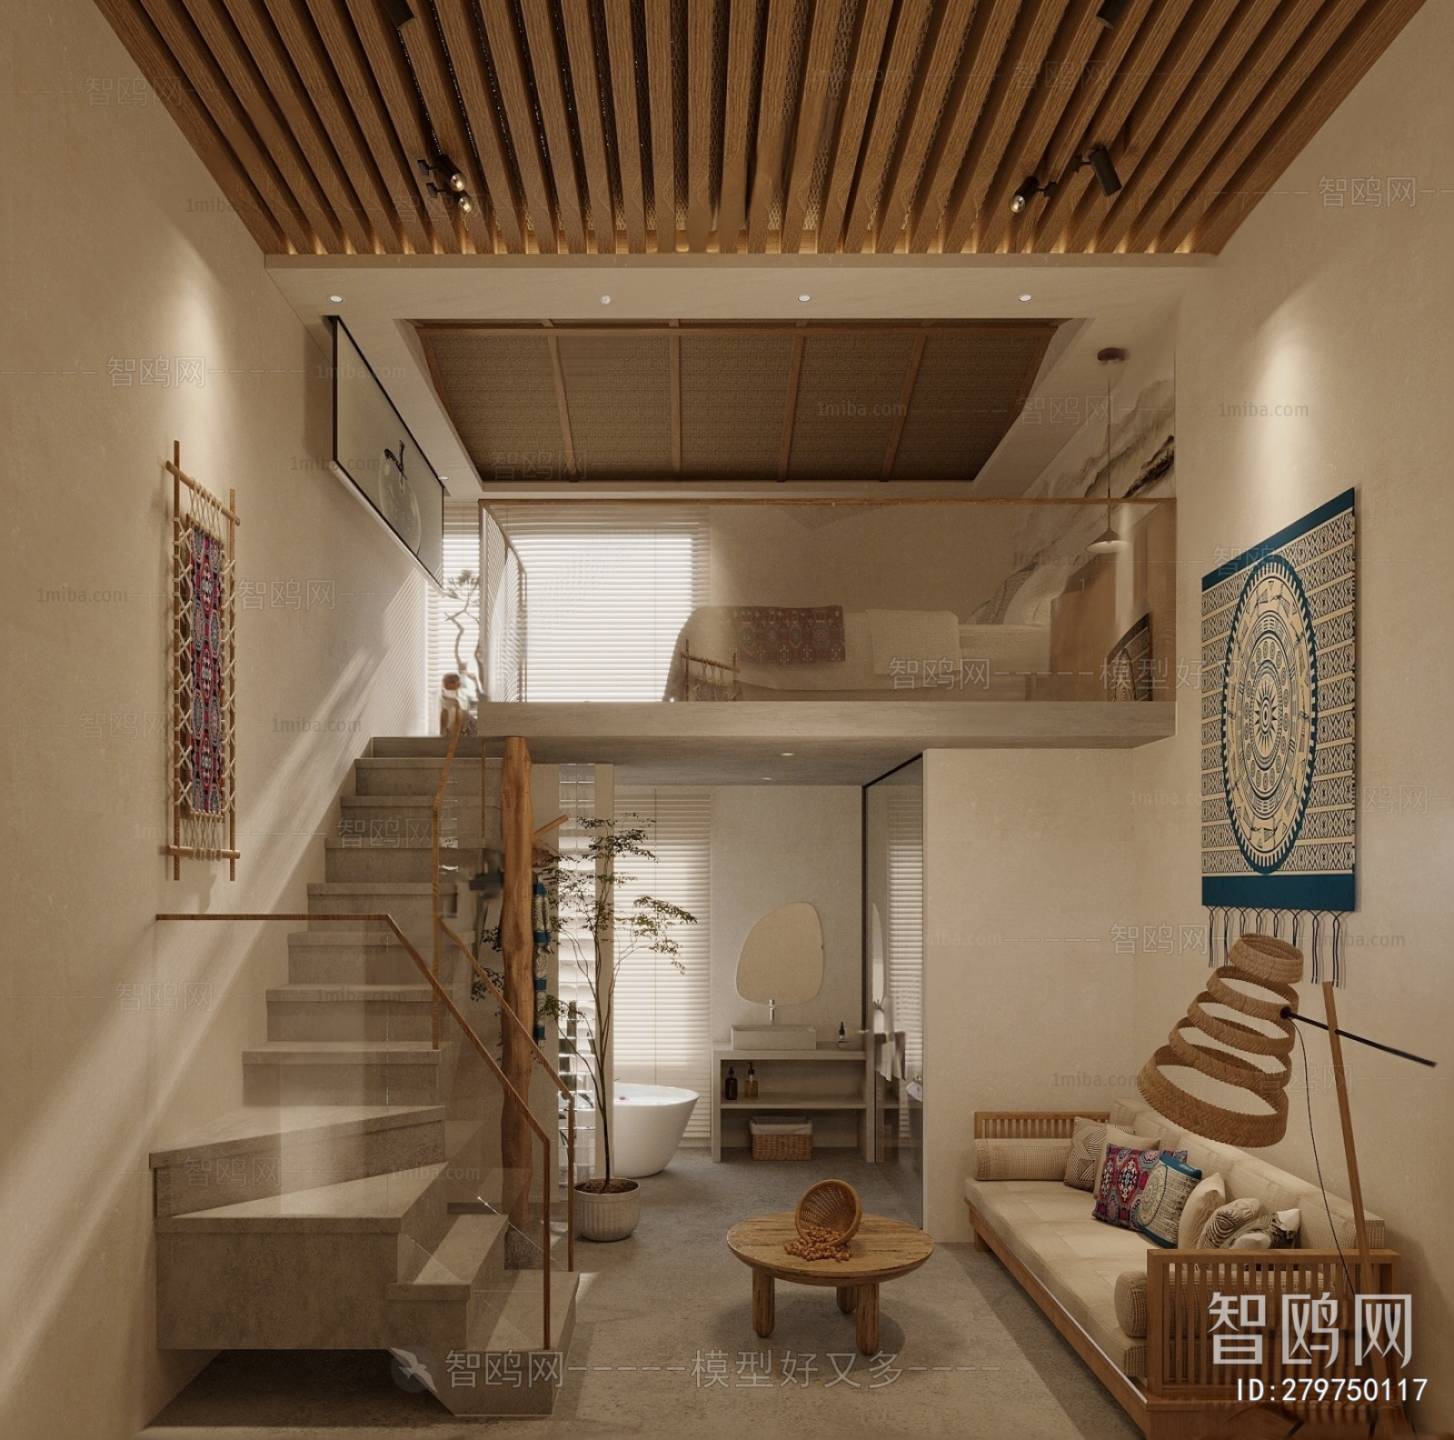 Wabi-sabi Style Apartment